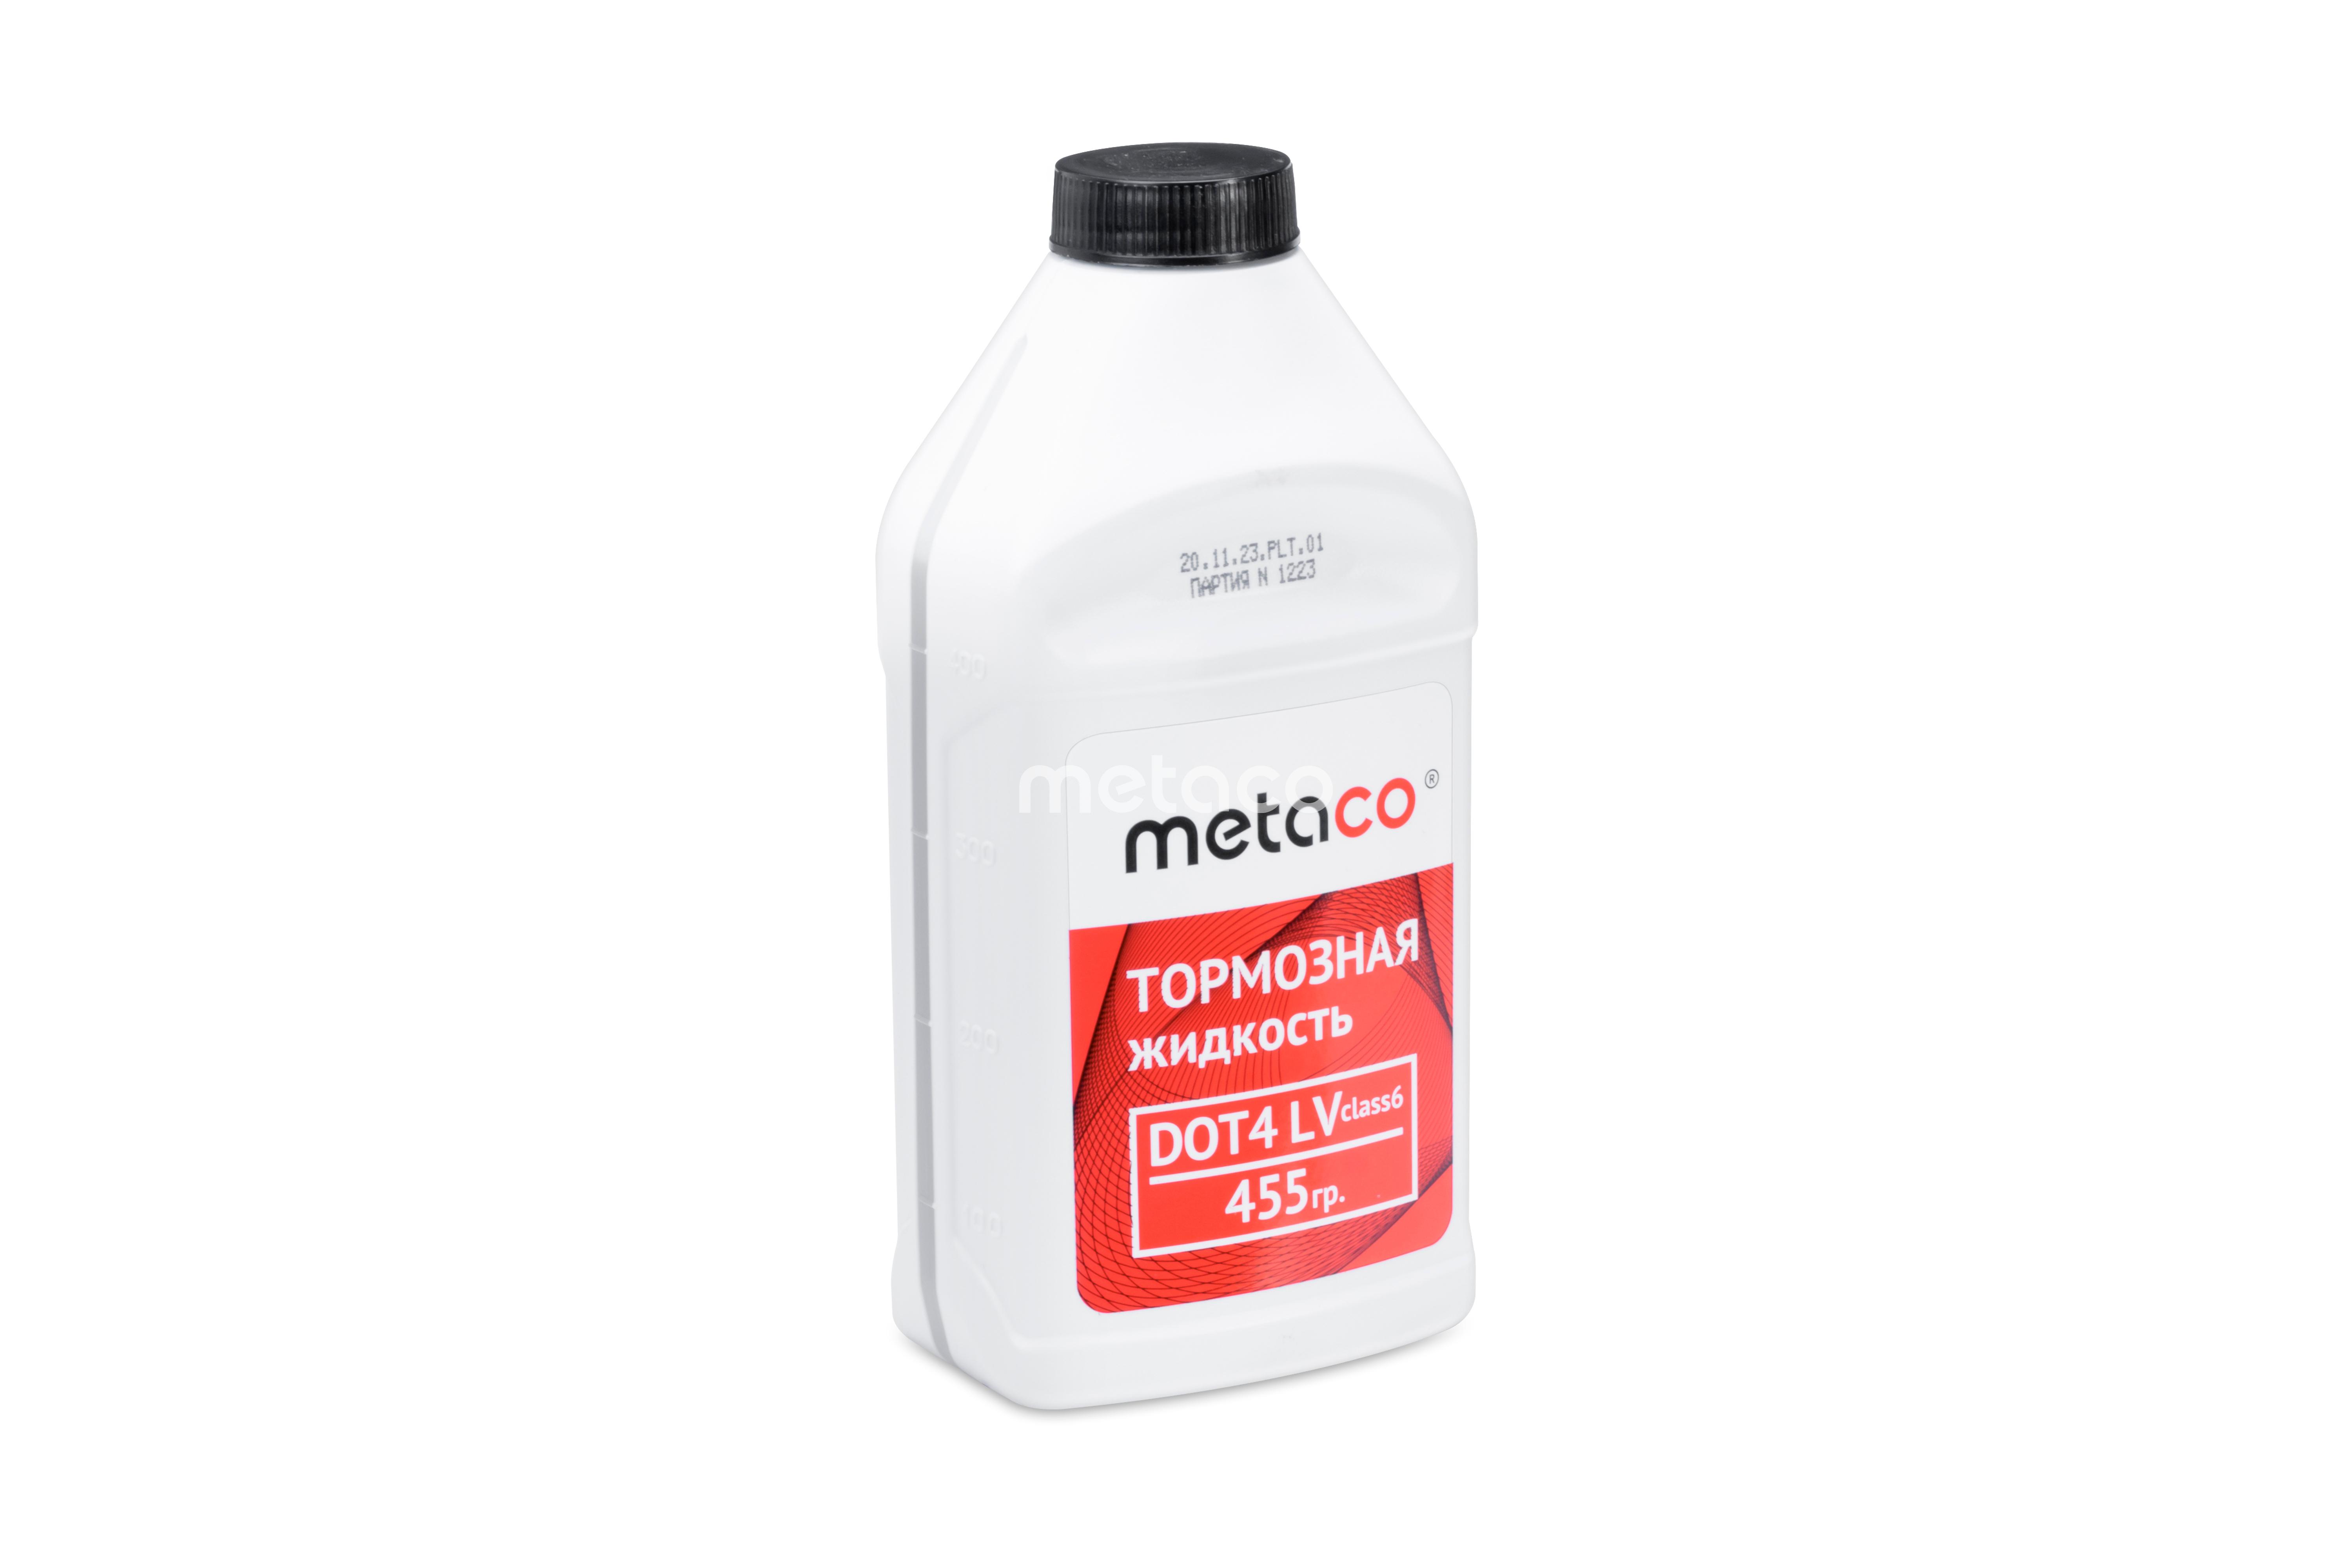 METACO Жидкость тормозная  DOT 4 LV CLASS 6 455гр   9982003 EAN:998-2003